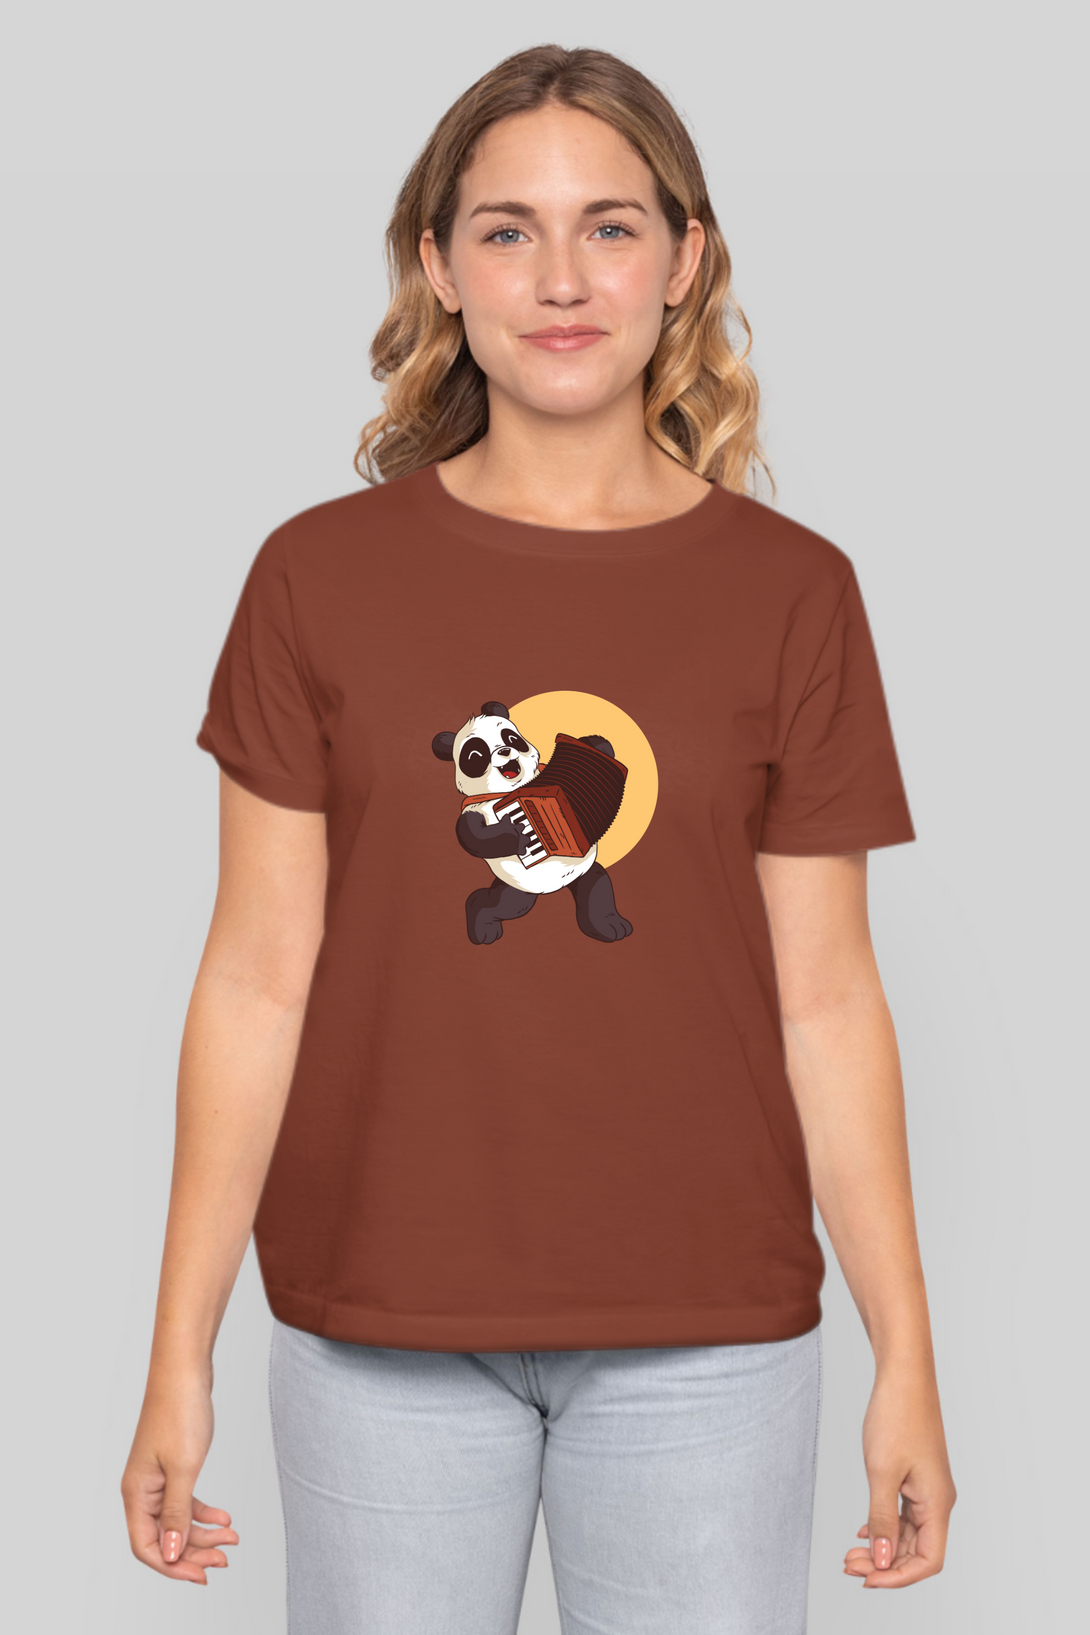 Panda Melody Printed T-Shirt For Women - WowWaves - 8